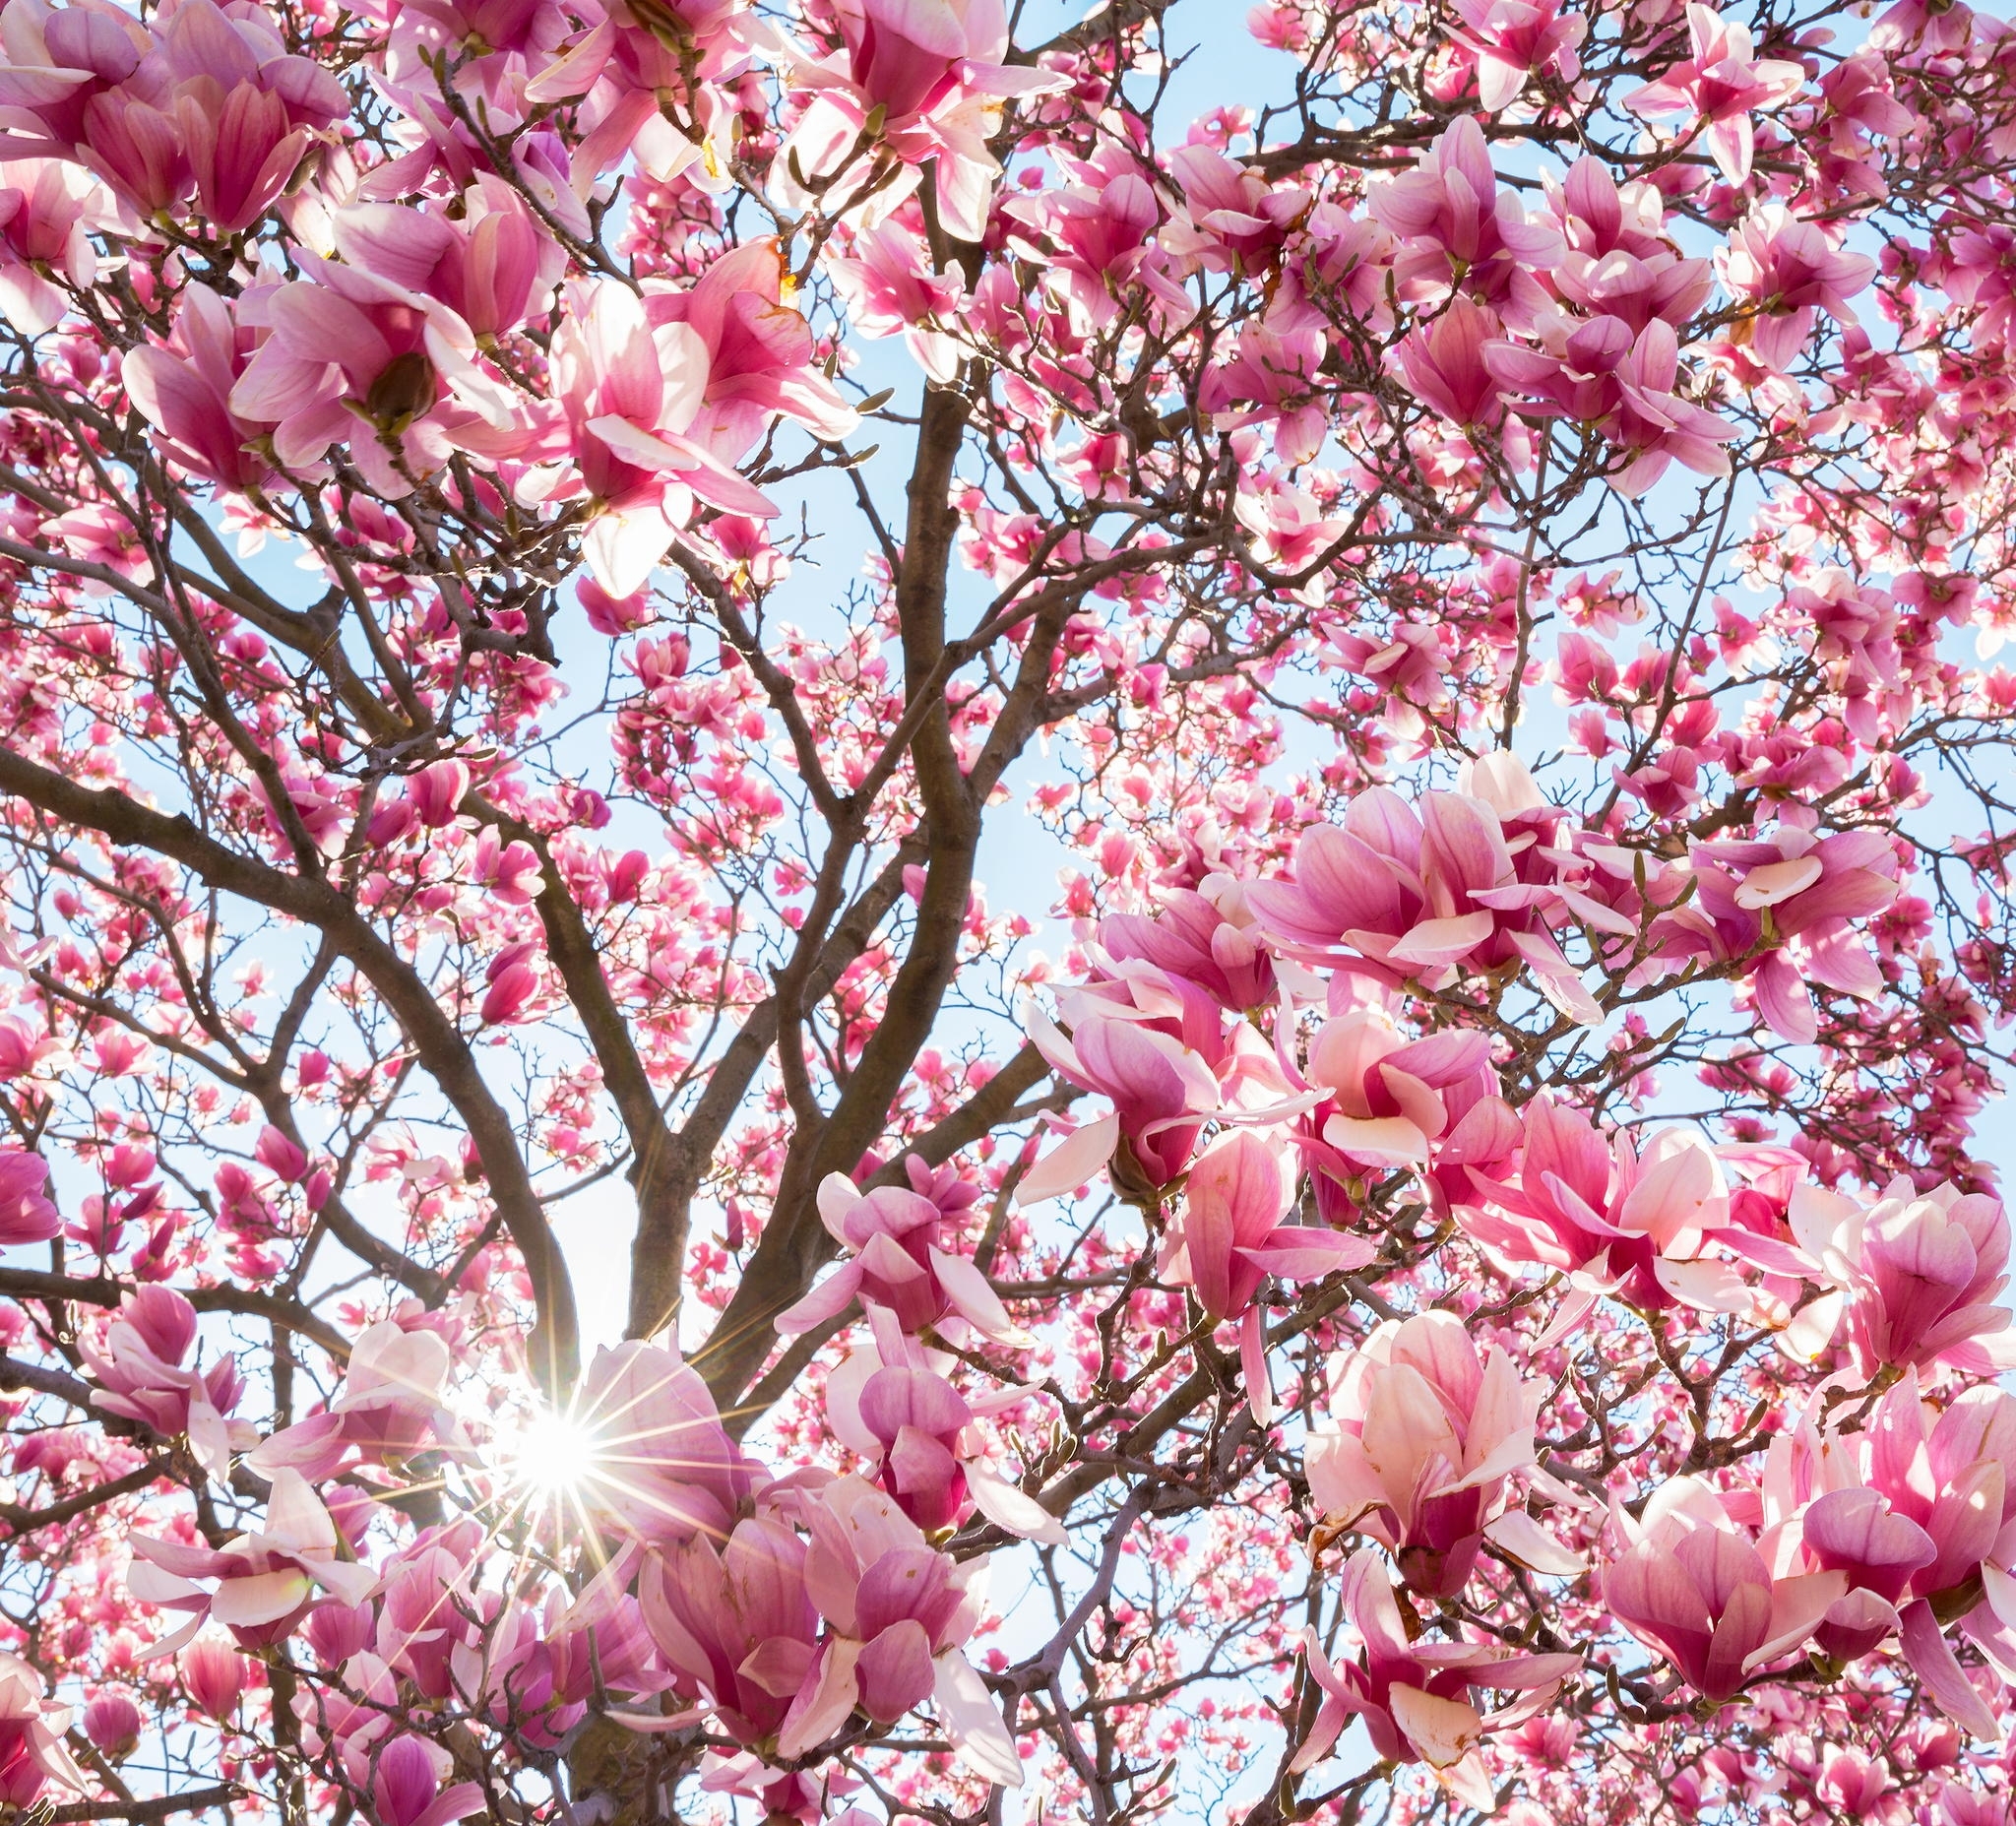 396677 descargar imagen tierra/naturaleza, florecer, flor, magnolia, naturaleza, flor rosa, primavera, rayo de sol, flores: fondos de pantalla y protectores de pantalla gratis